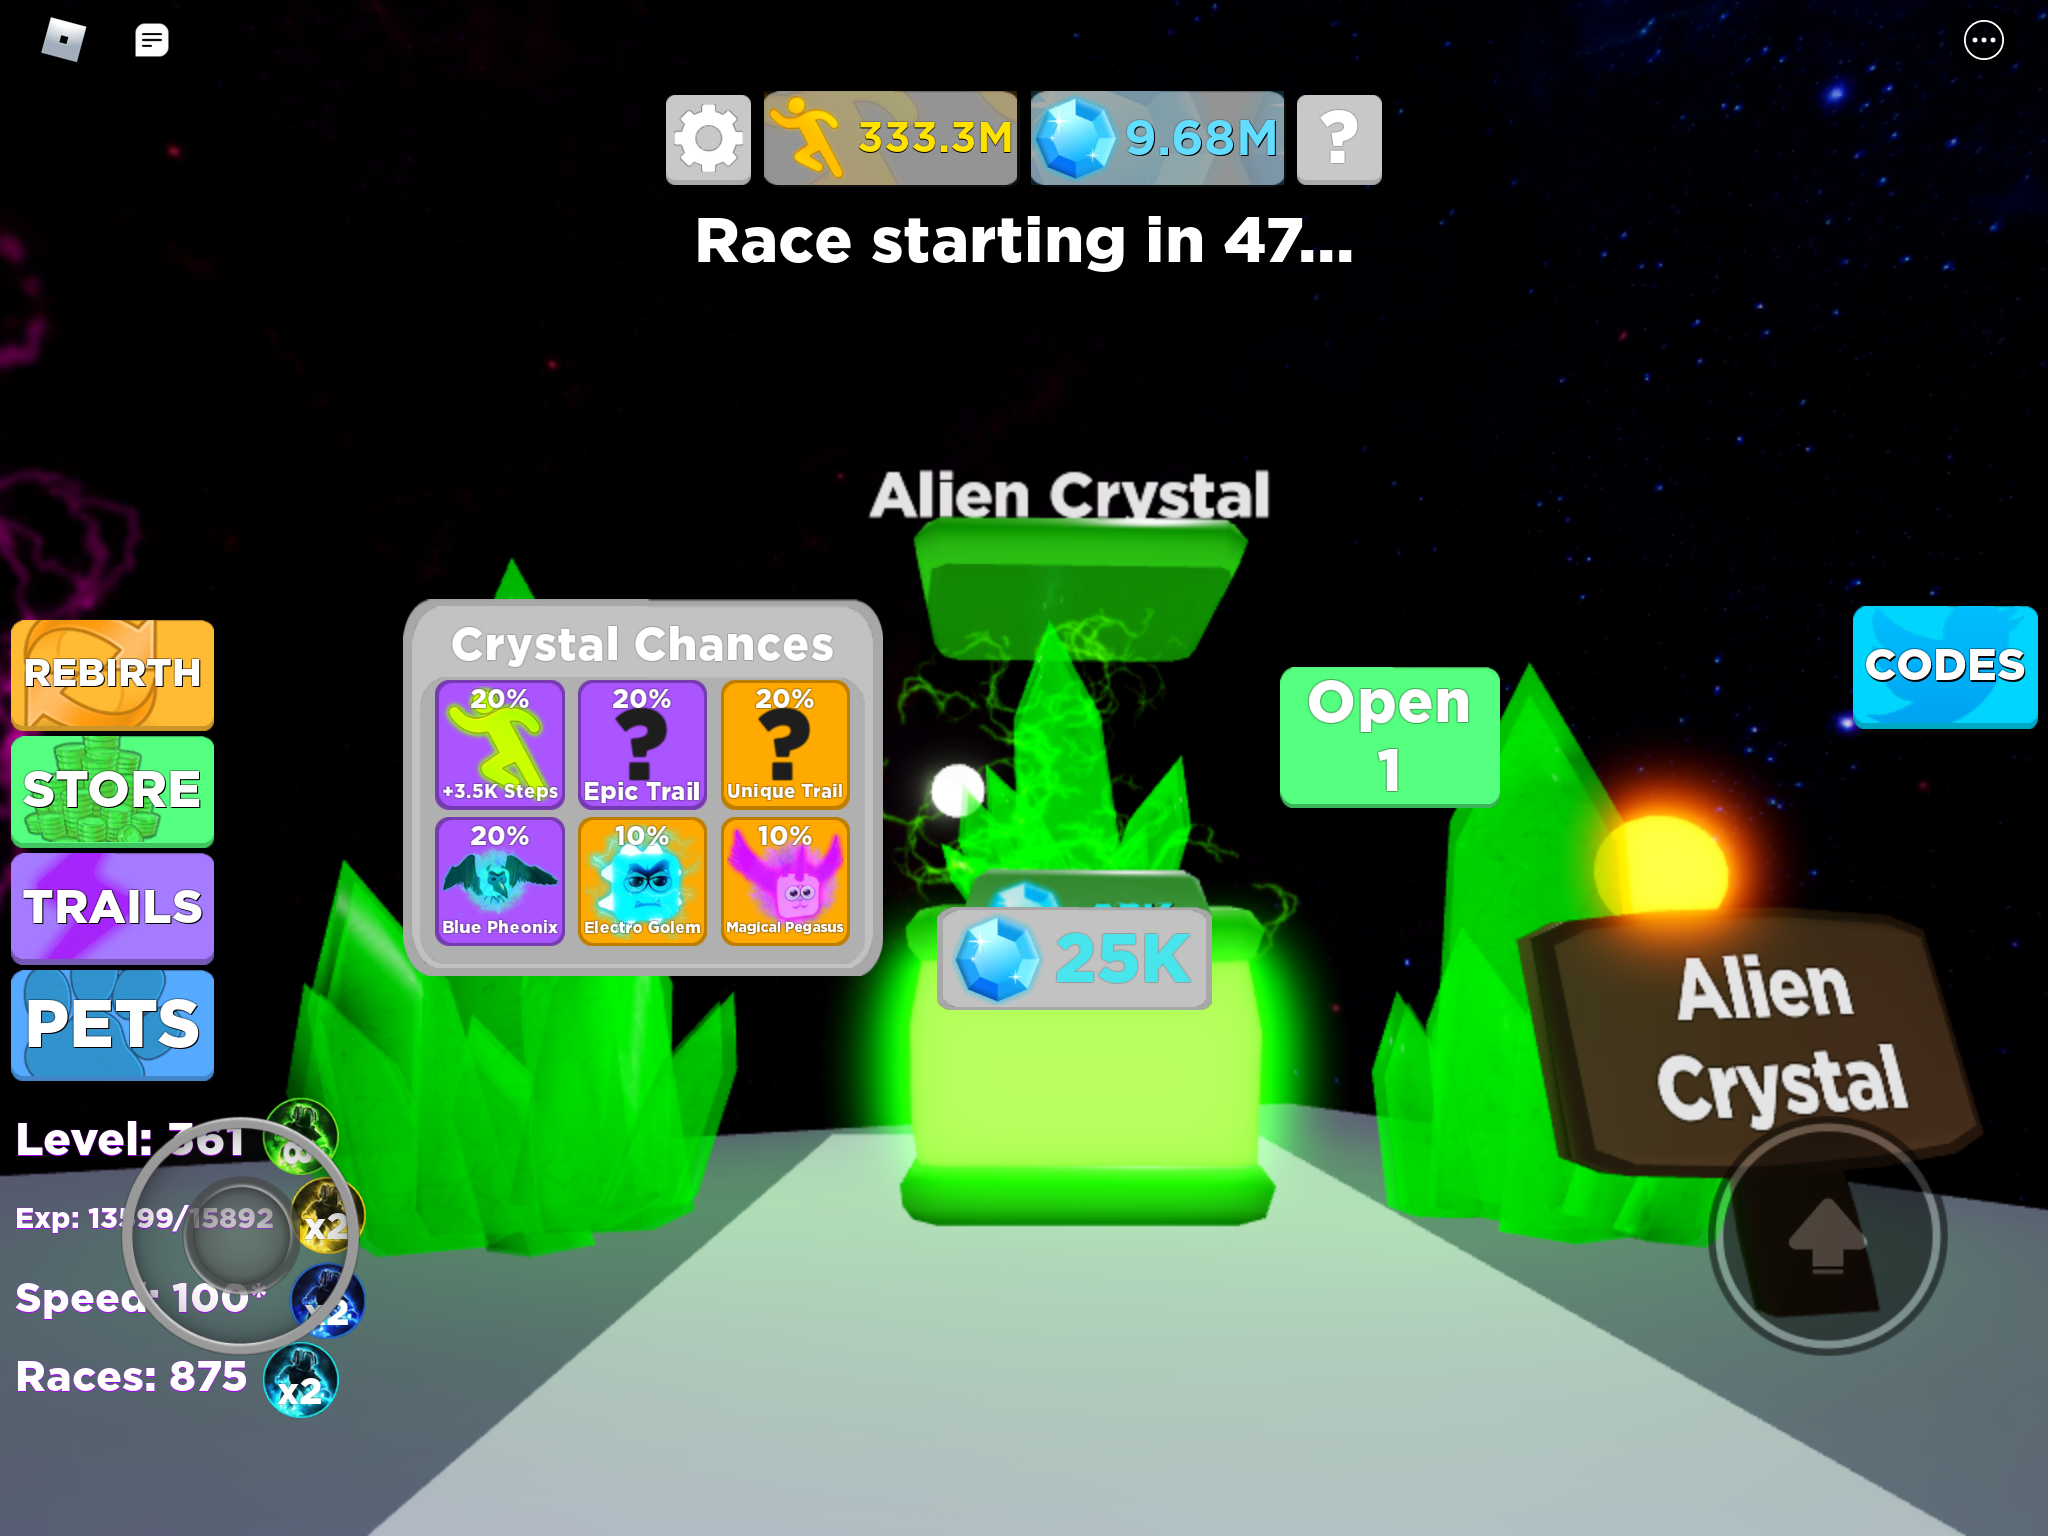 Alien Crystal Legends Of Speed Wiki Fandom - how to get trails in legends of speed roblox